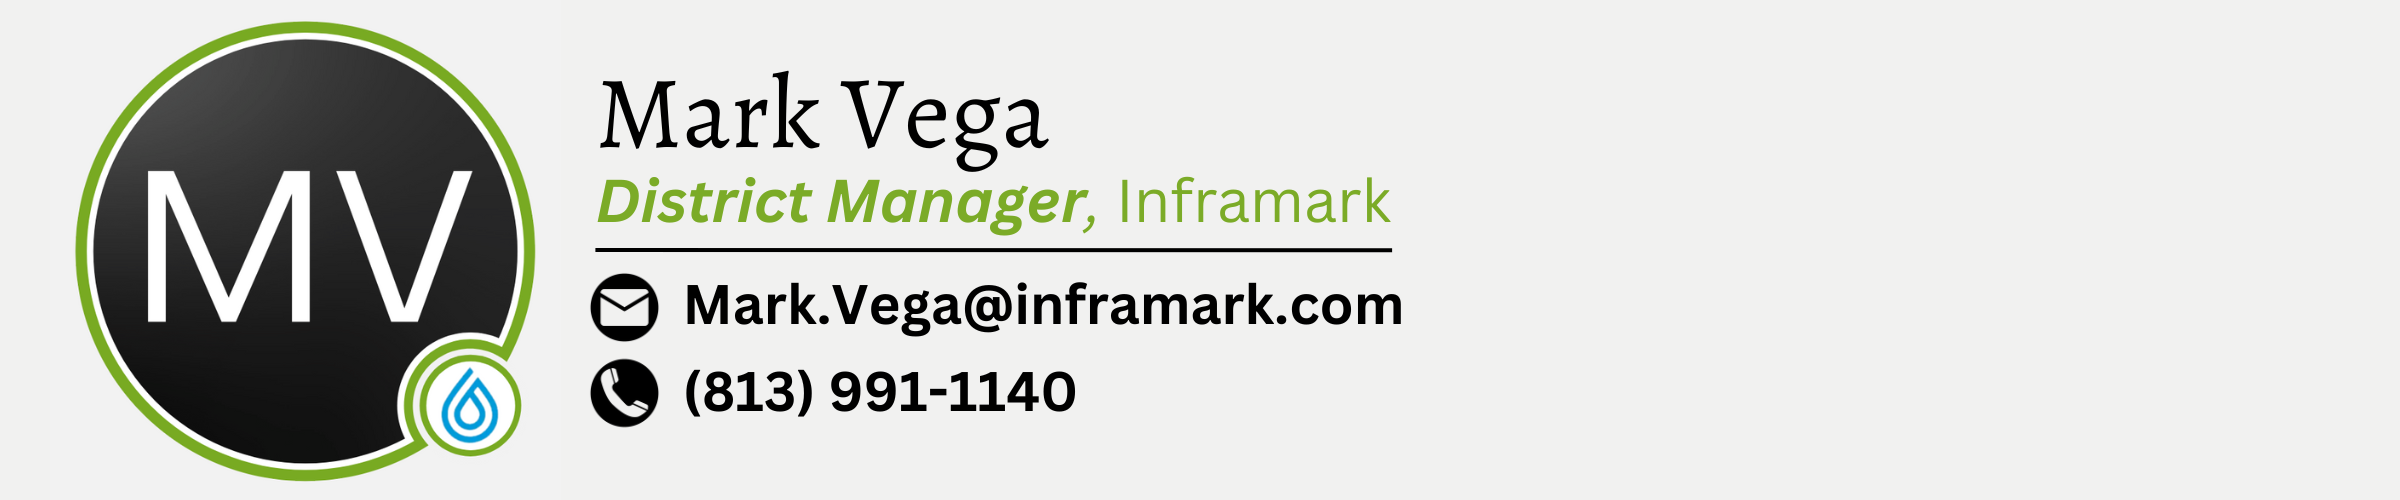 Mark Vega. District Manager, Inframark. Email is Mark.Vega@inframark.com. Phone number is 813-991-1140.